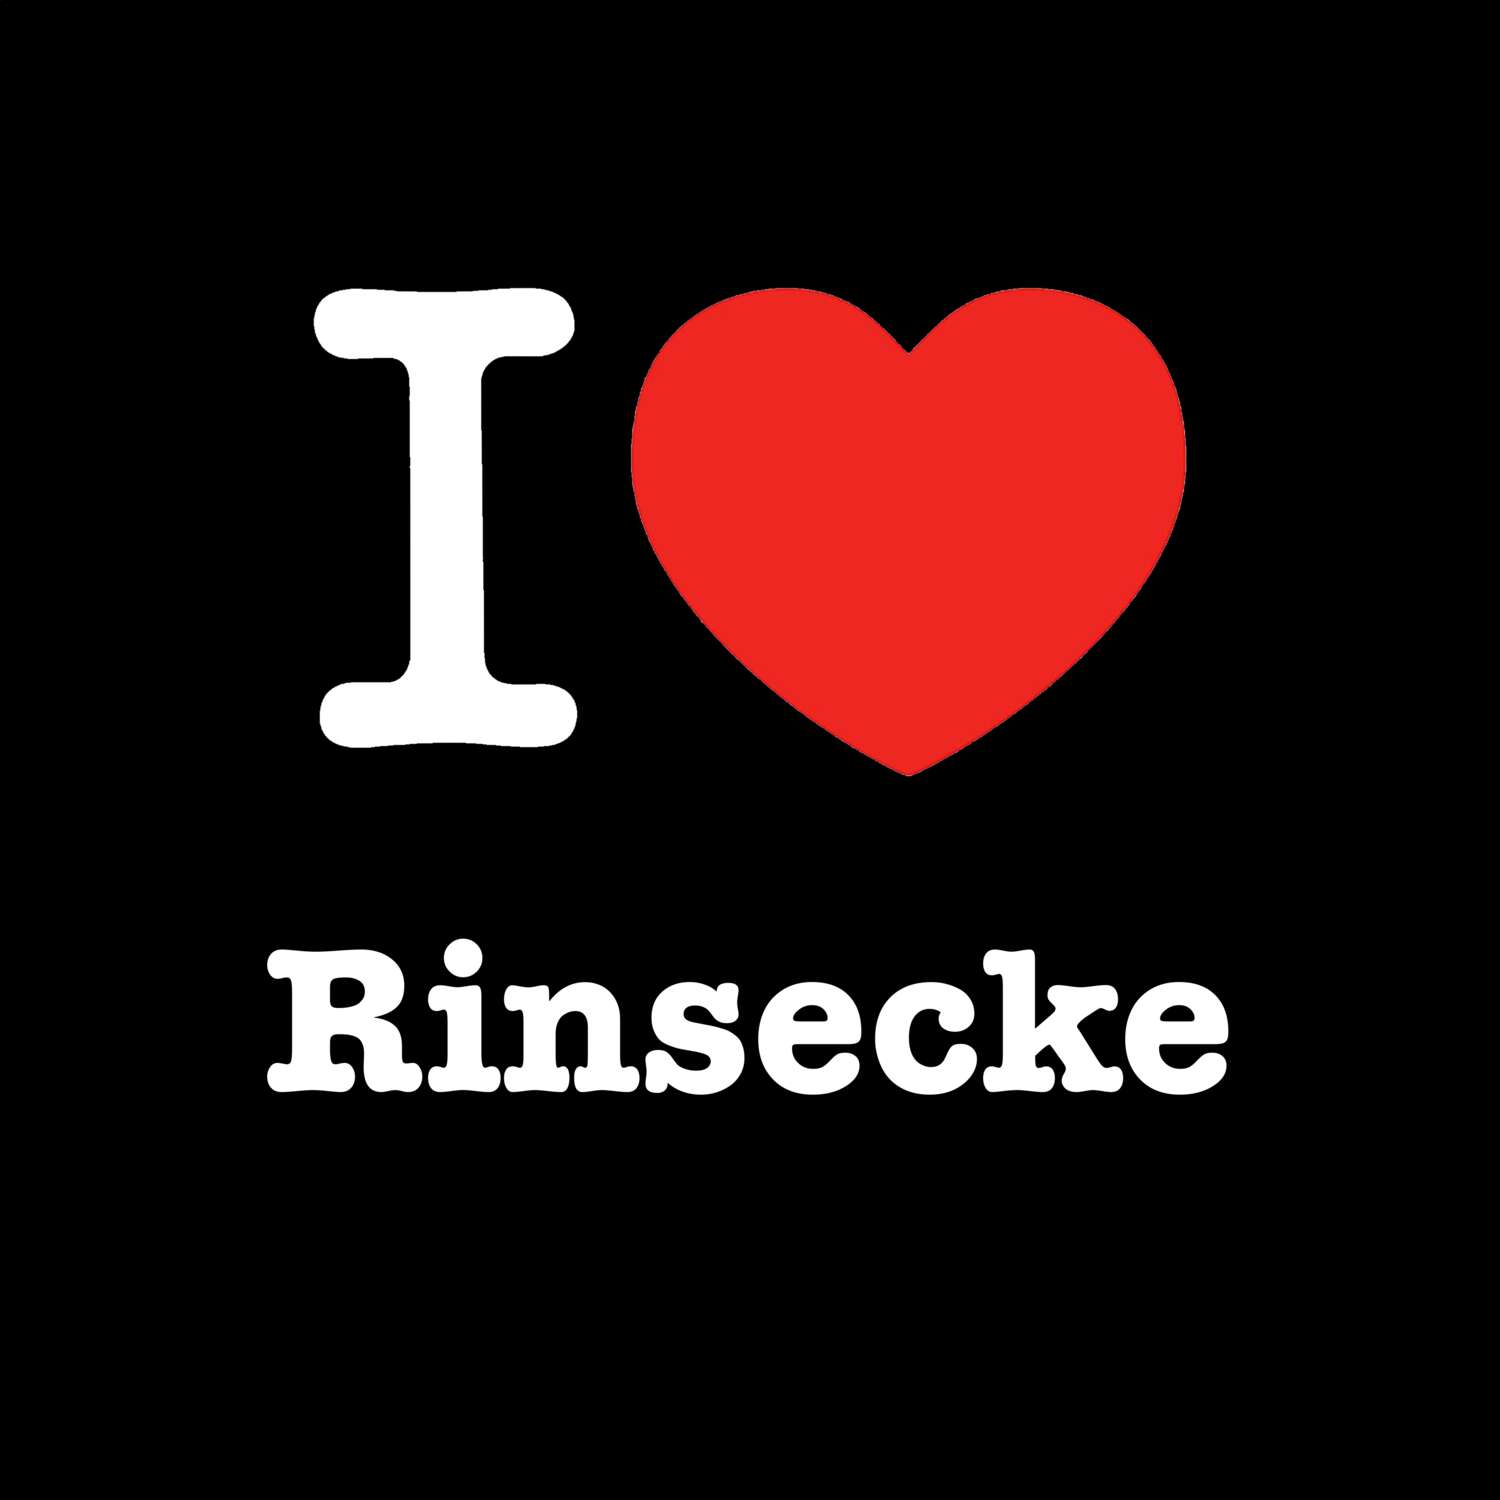 Rinsecke T-Shirt »I love«